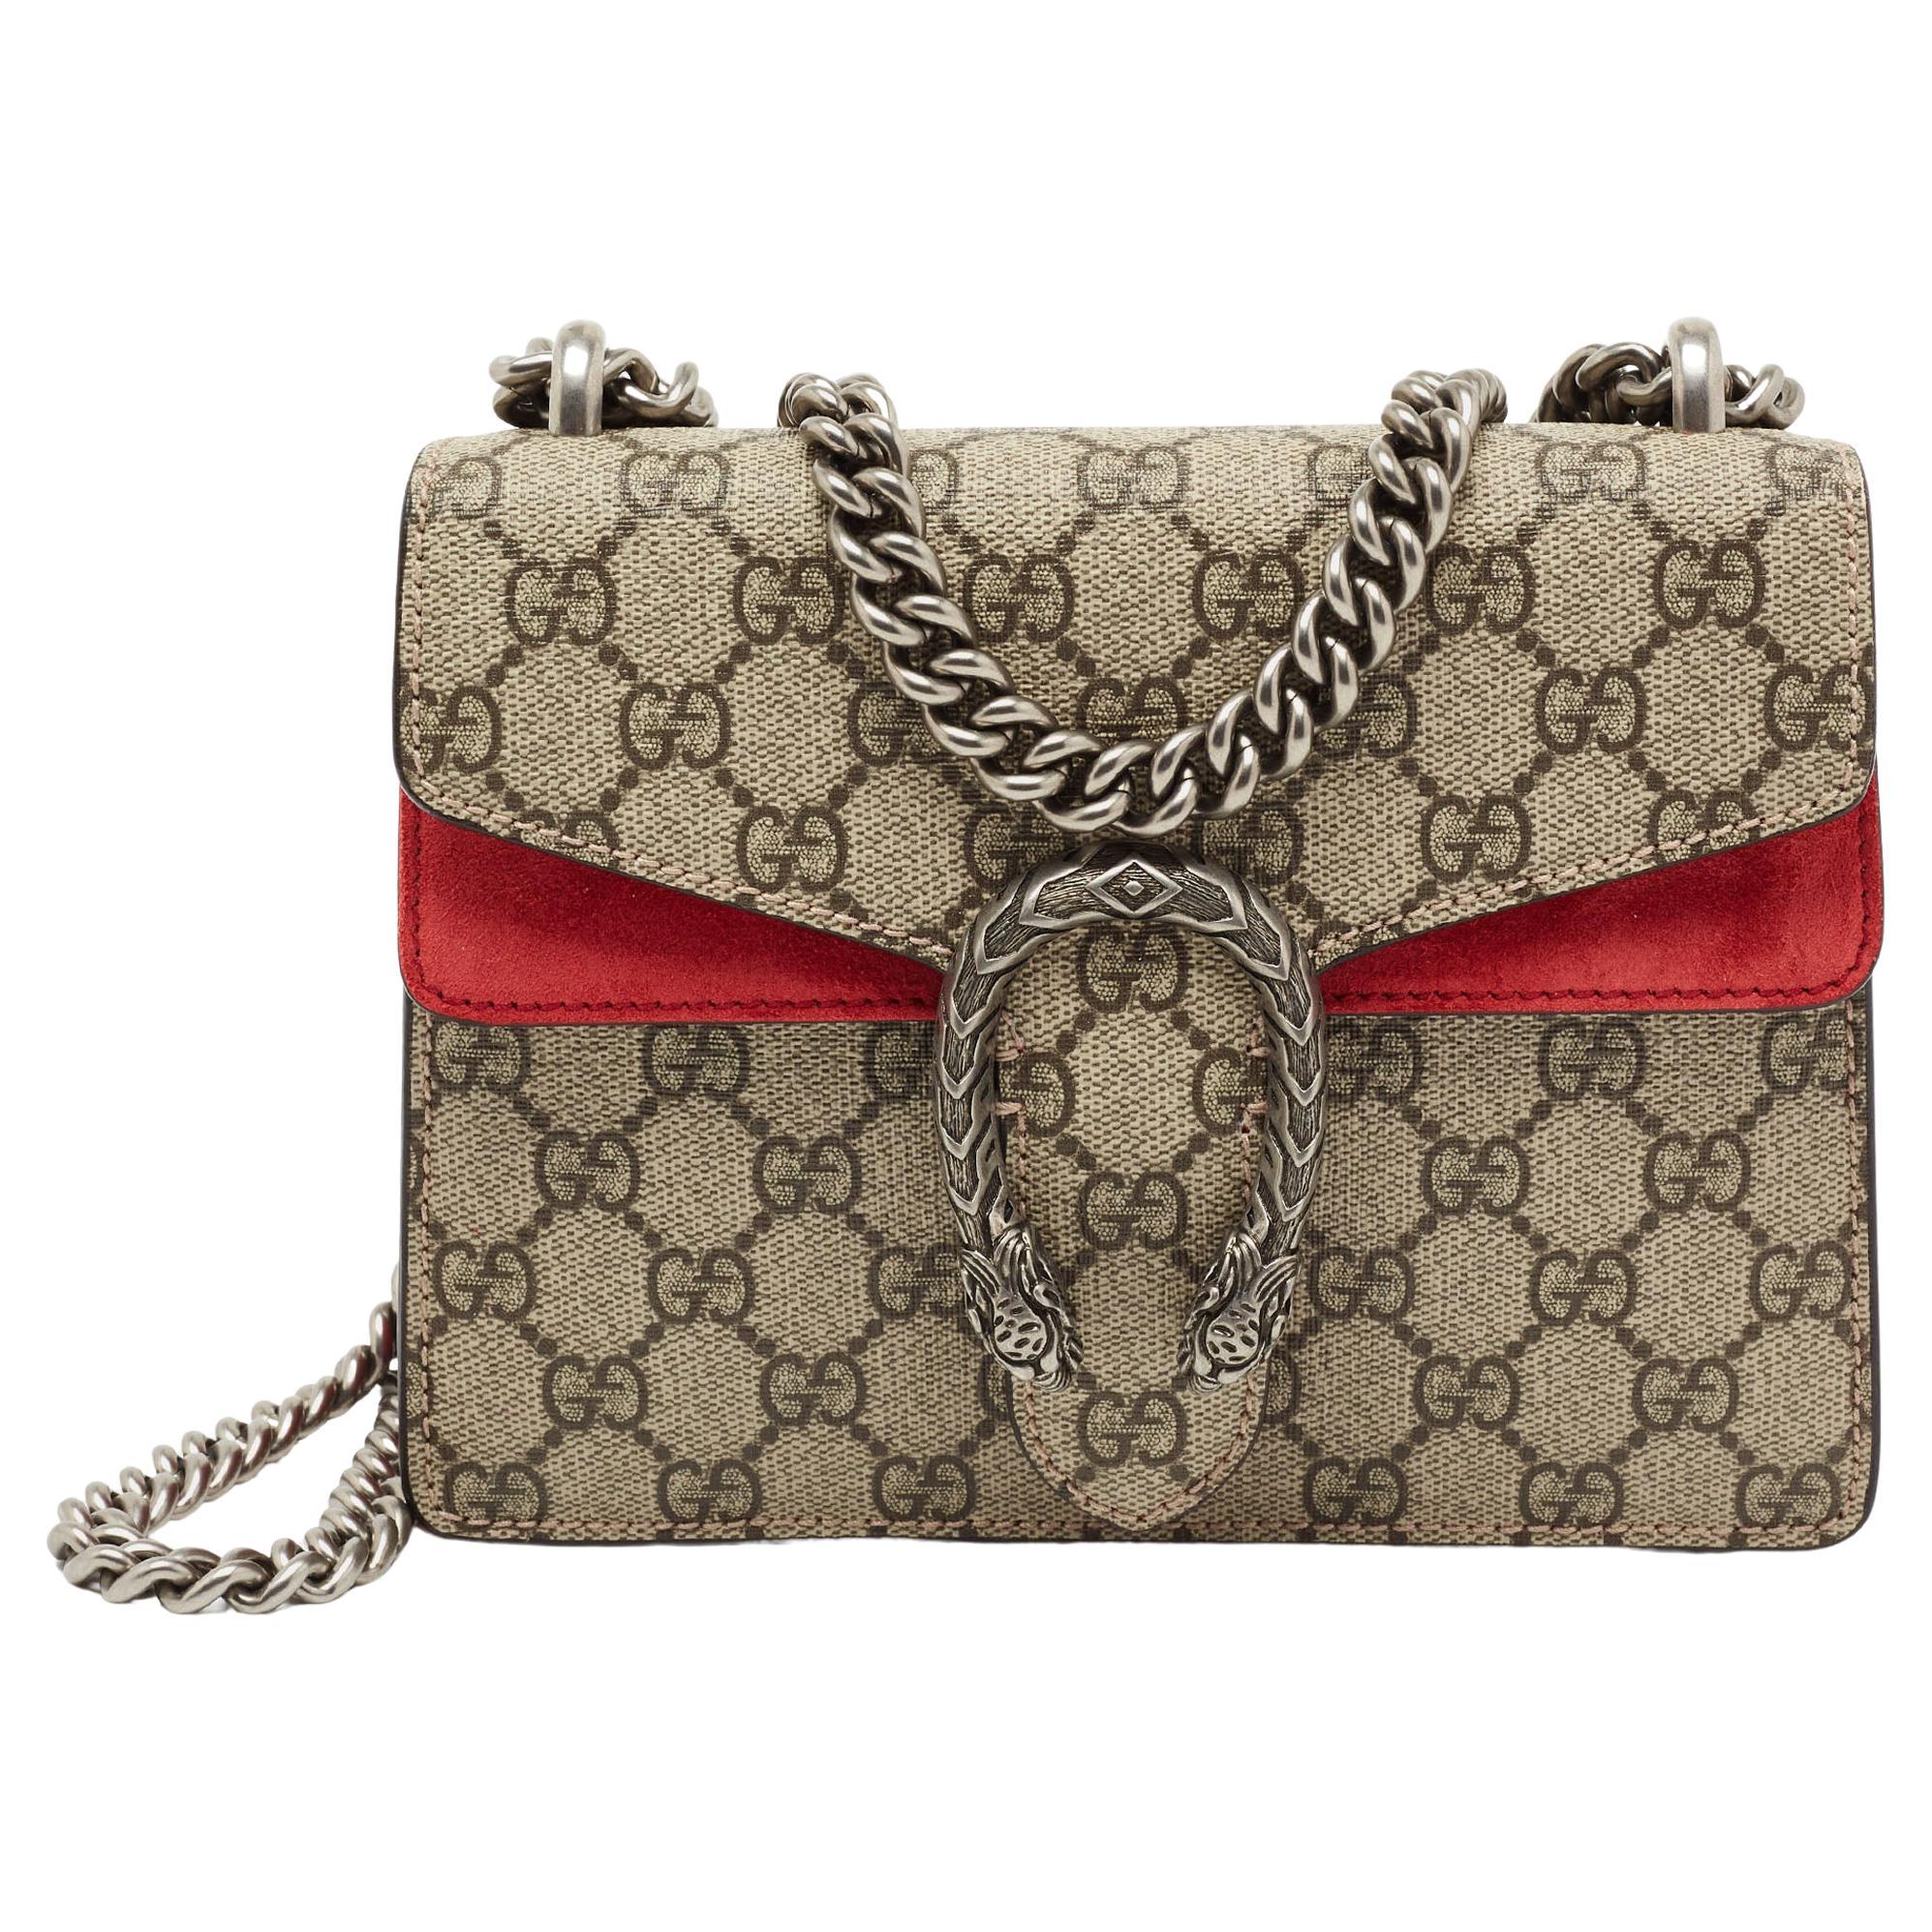 Gucci Dionysus Shoulder Bag GG Supreme Small Beige/Red